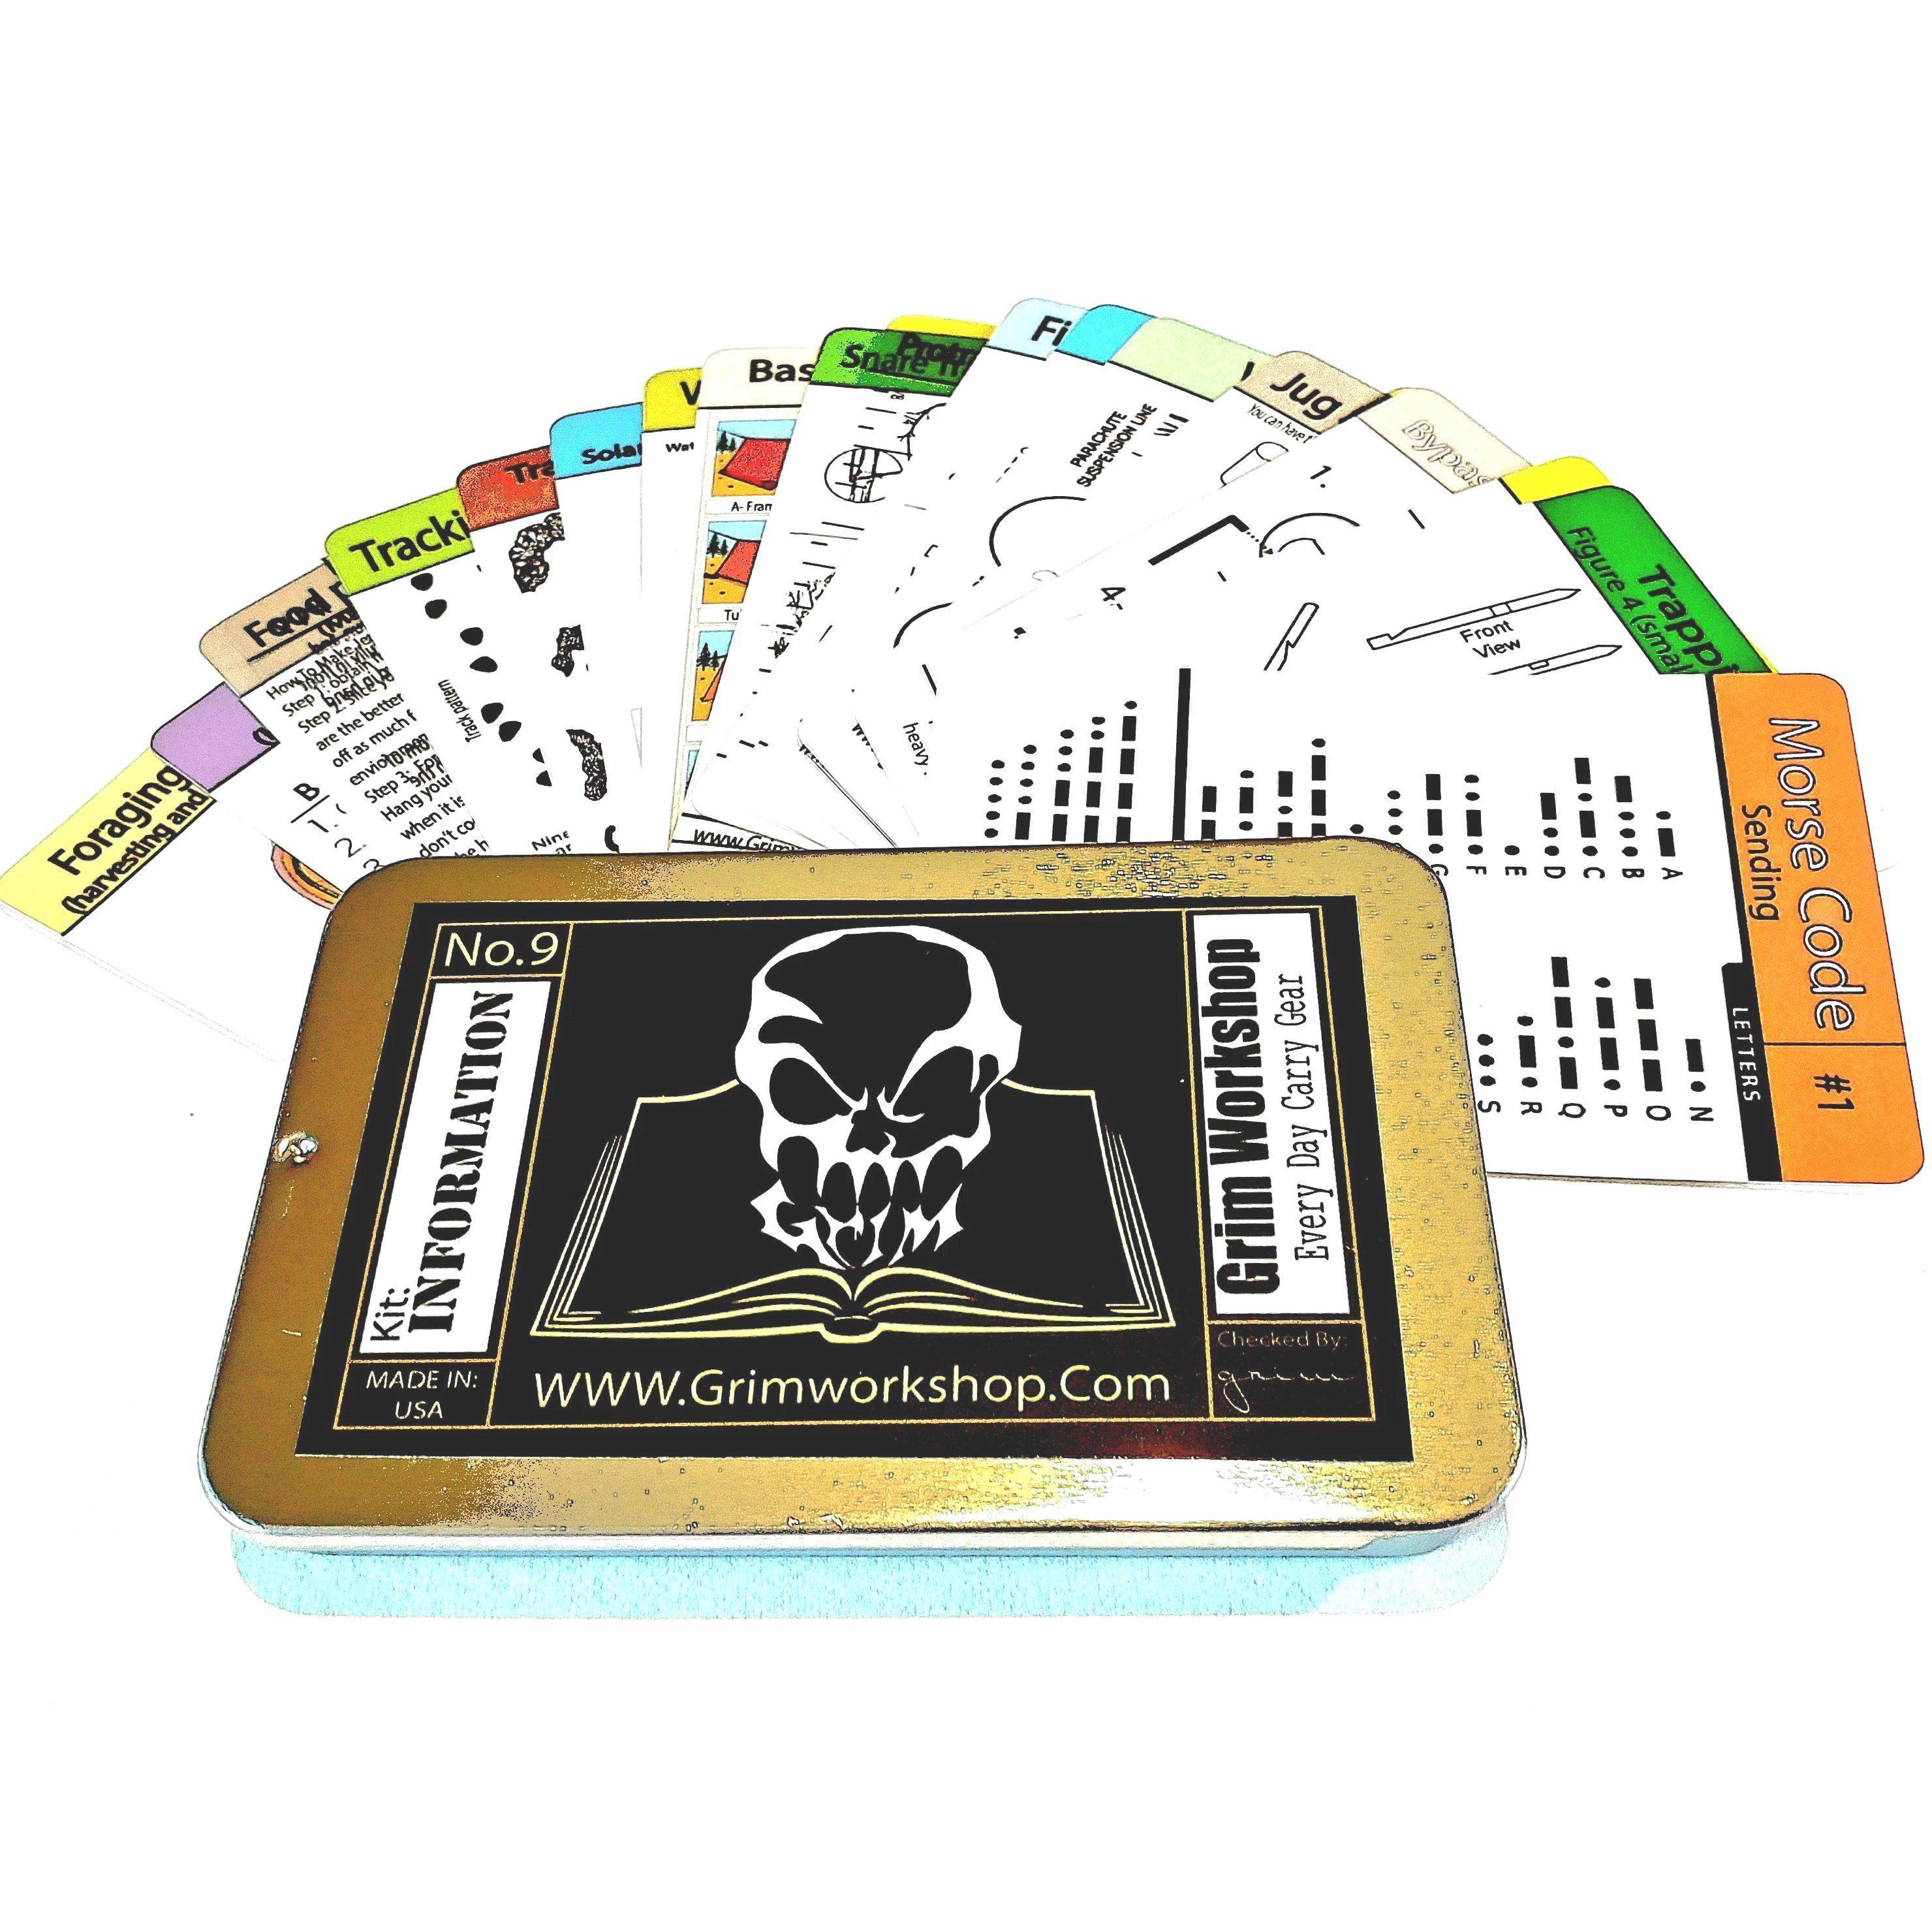 20 Piece Tip Card Kit, Survival Tip Cards